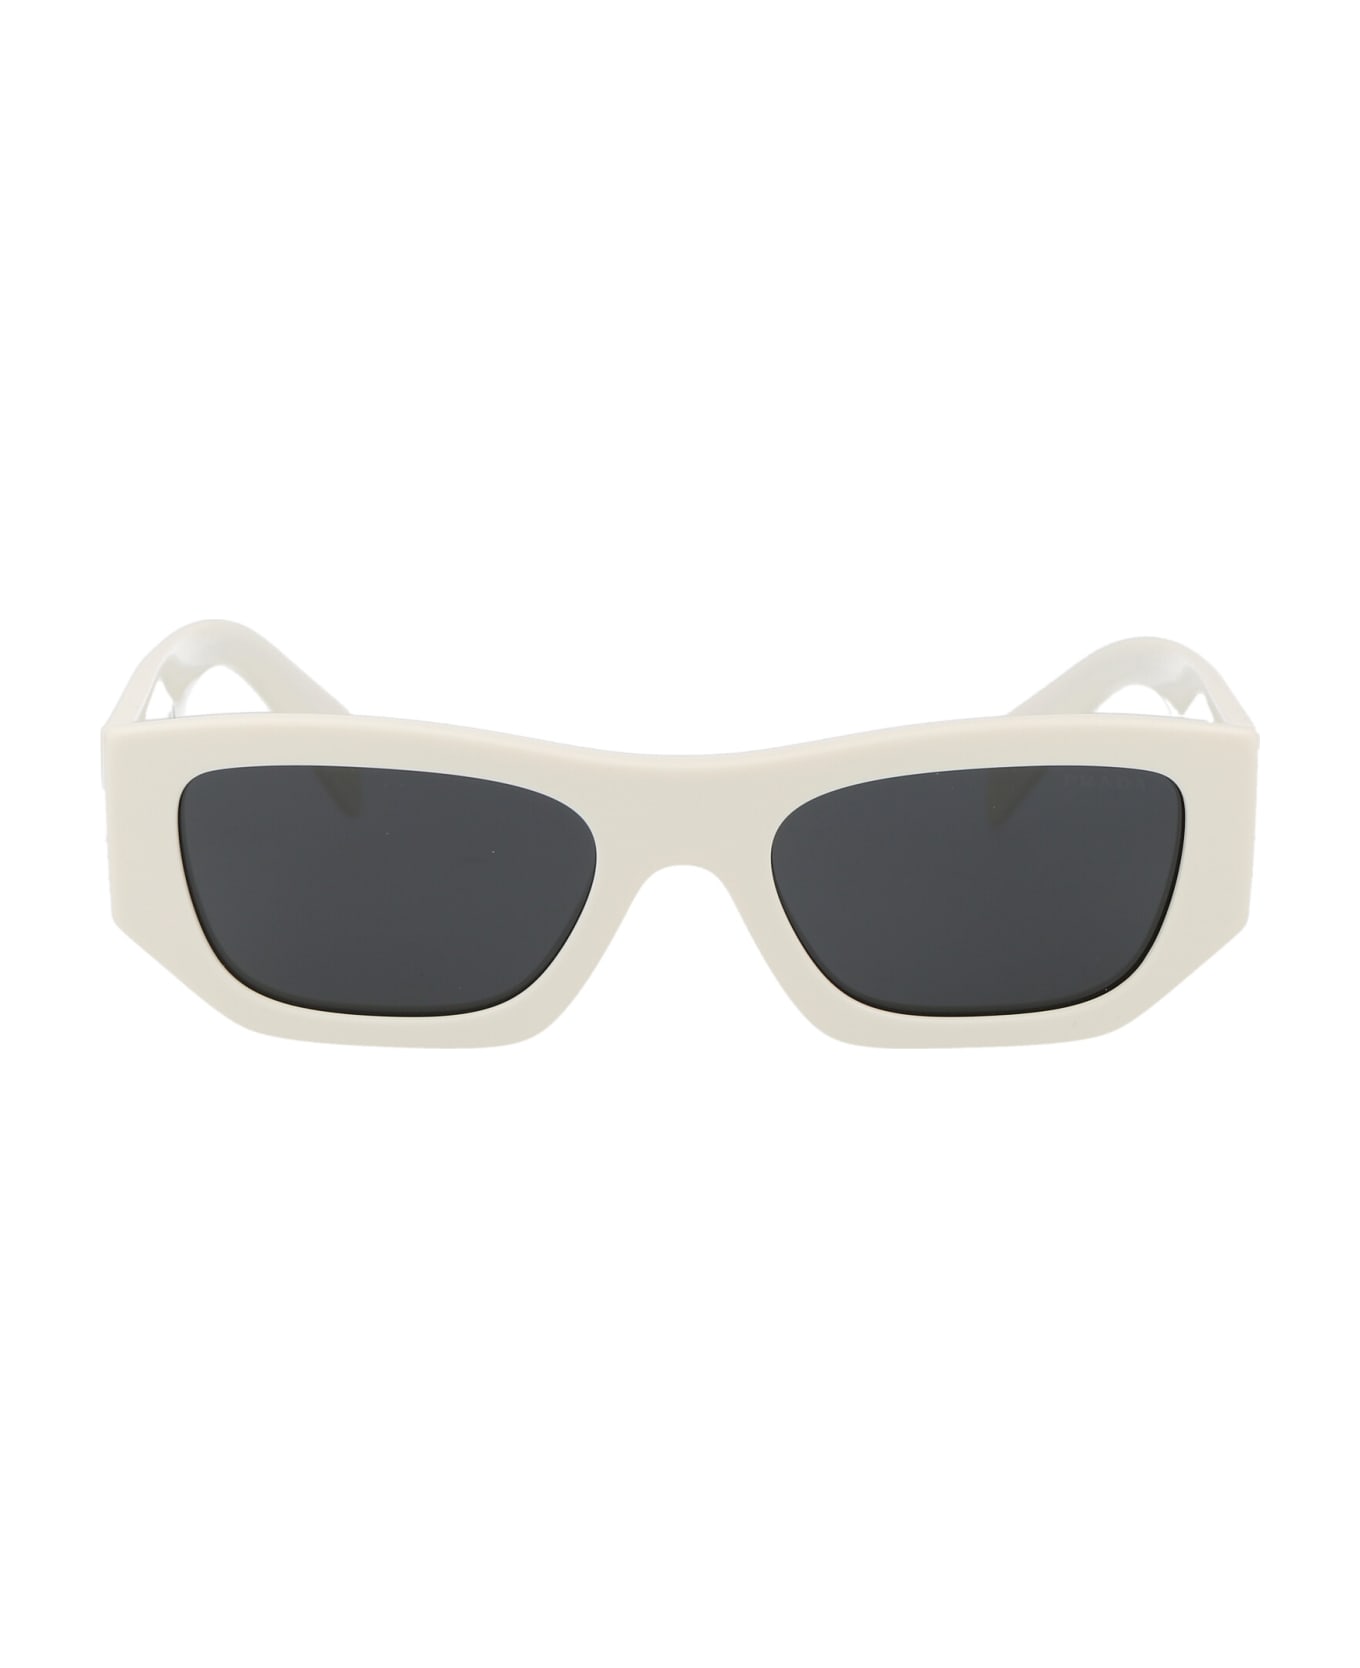 Prada Eyewear 0pr A01s Sunglasses - 17K08Z White